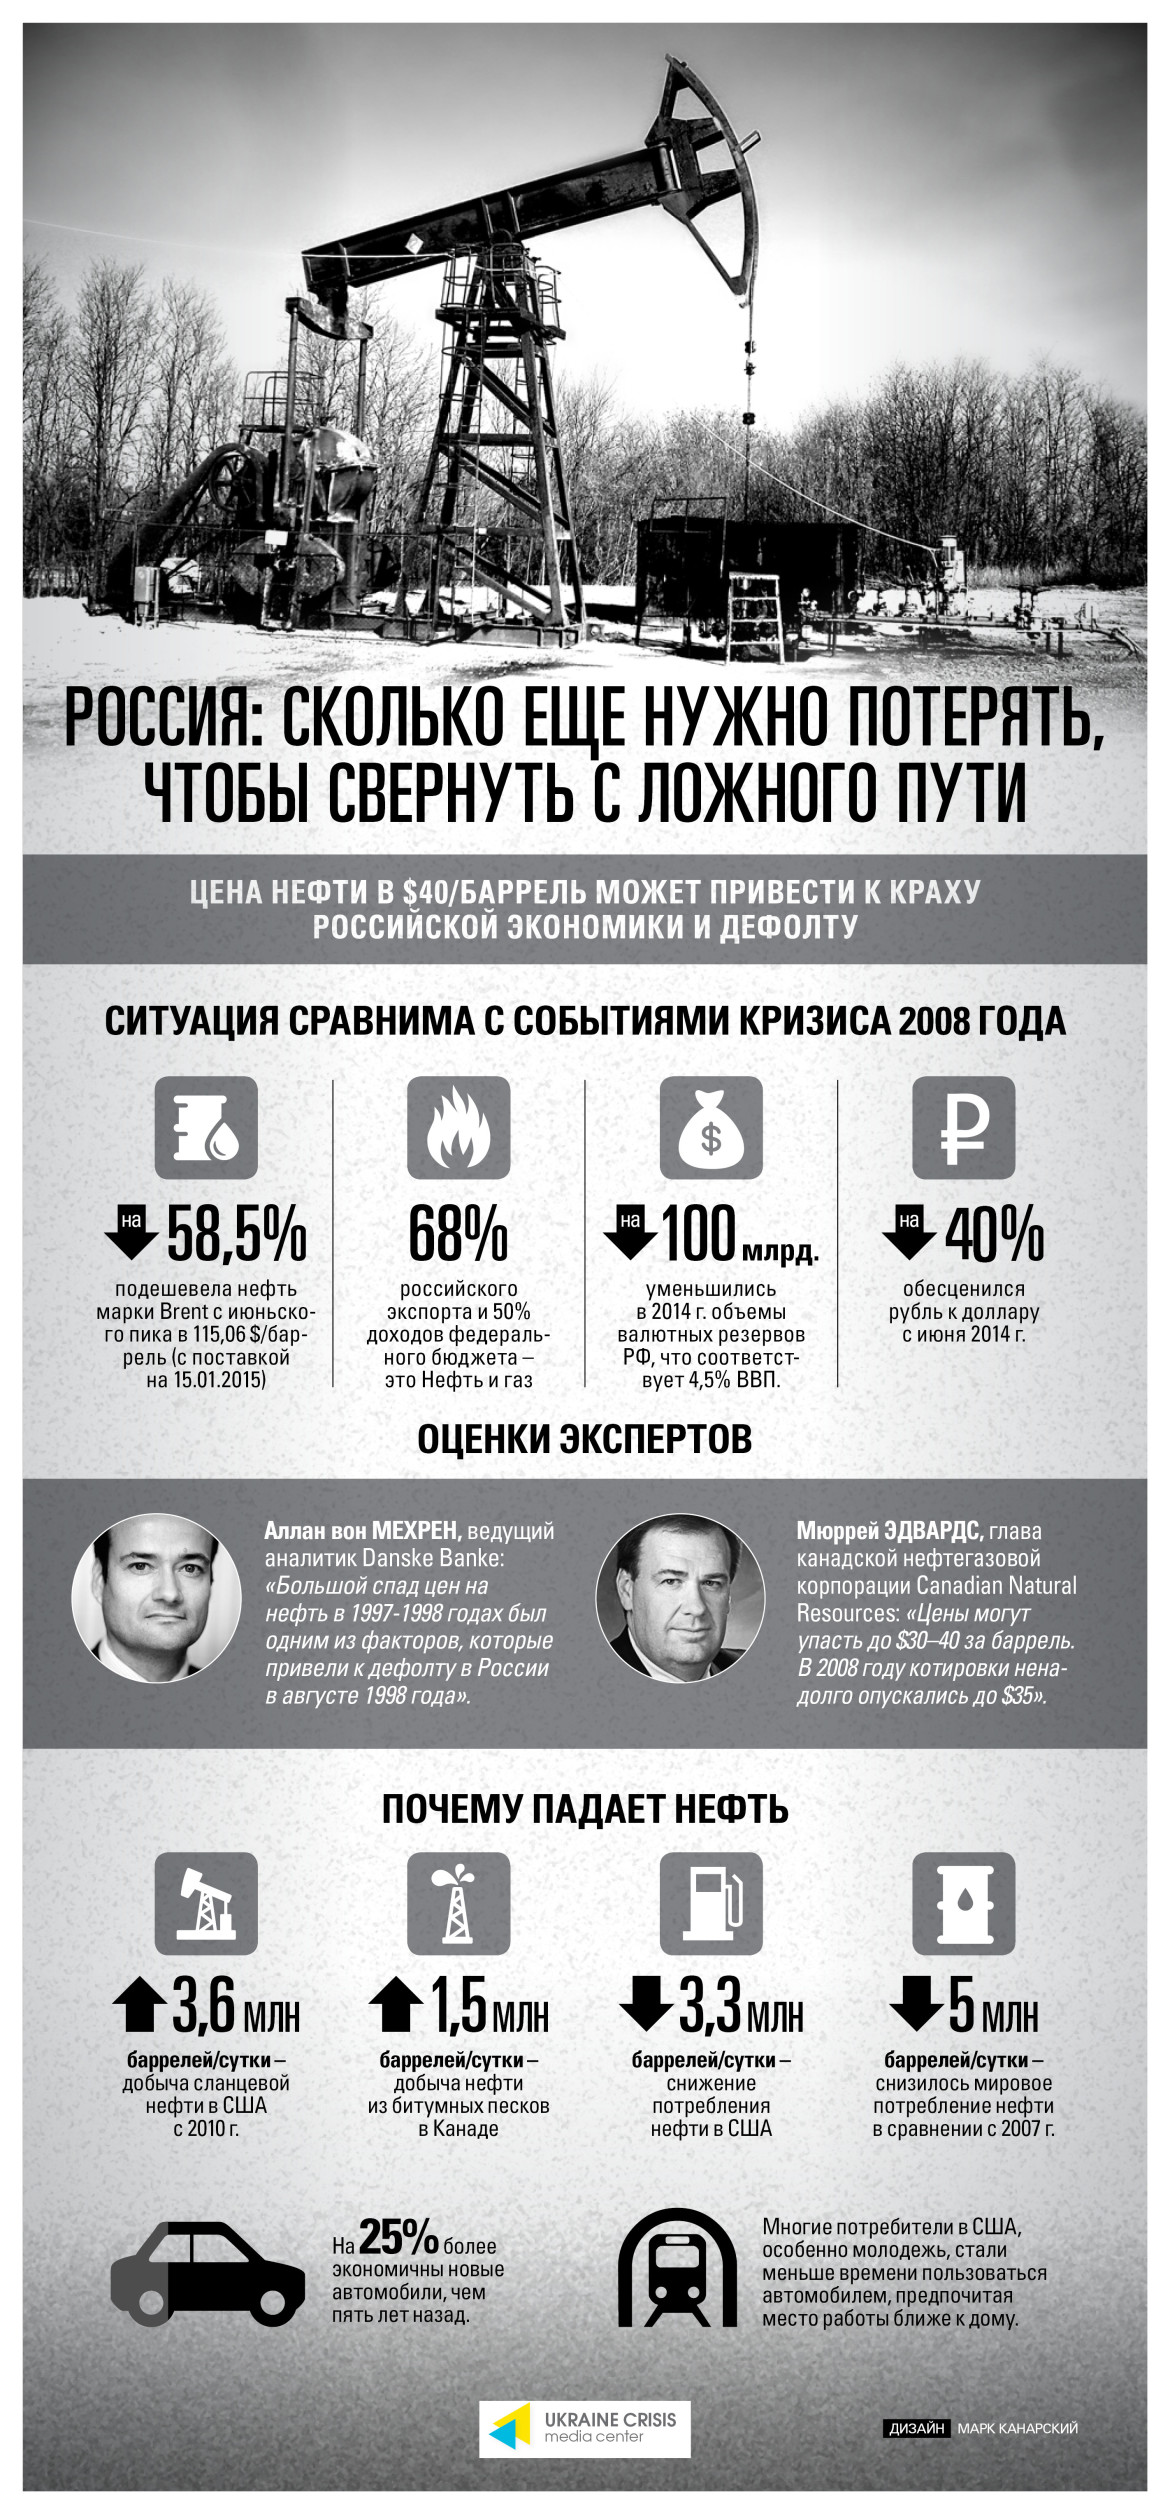 info-russia_oil-russ-03